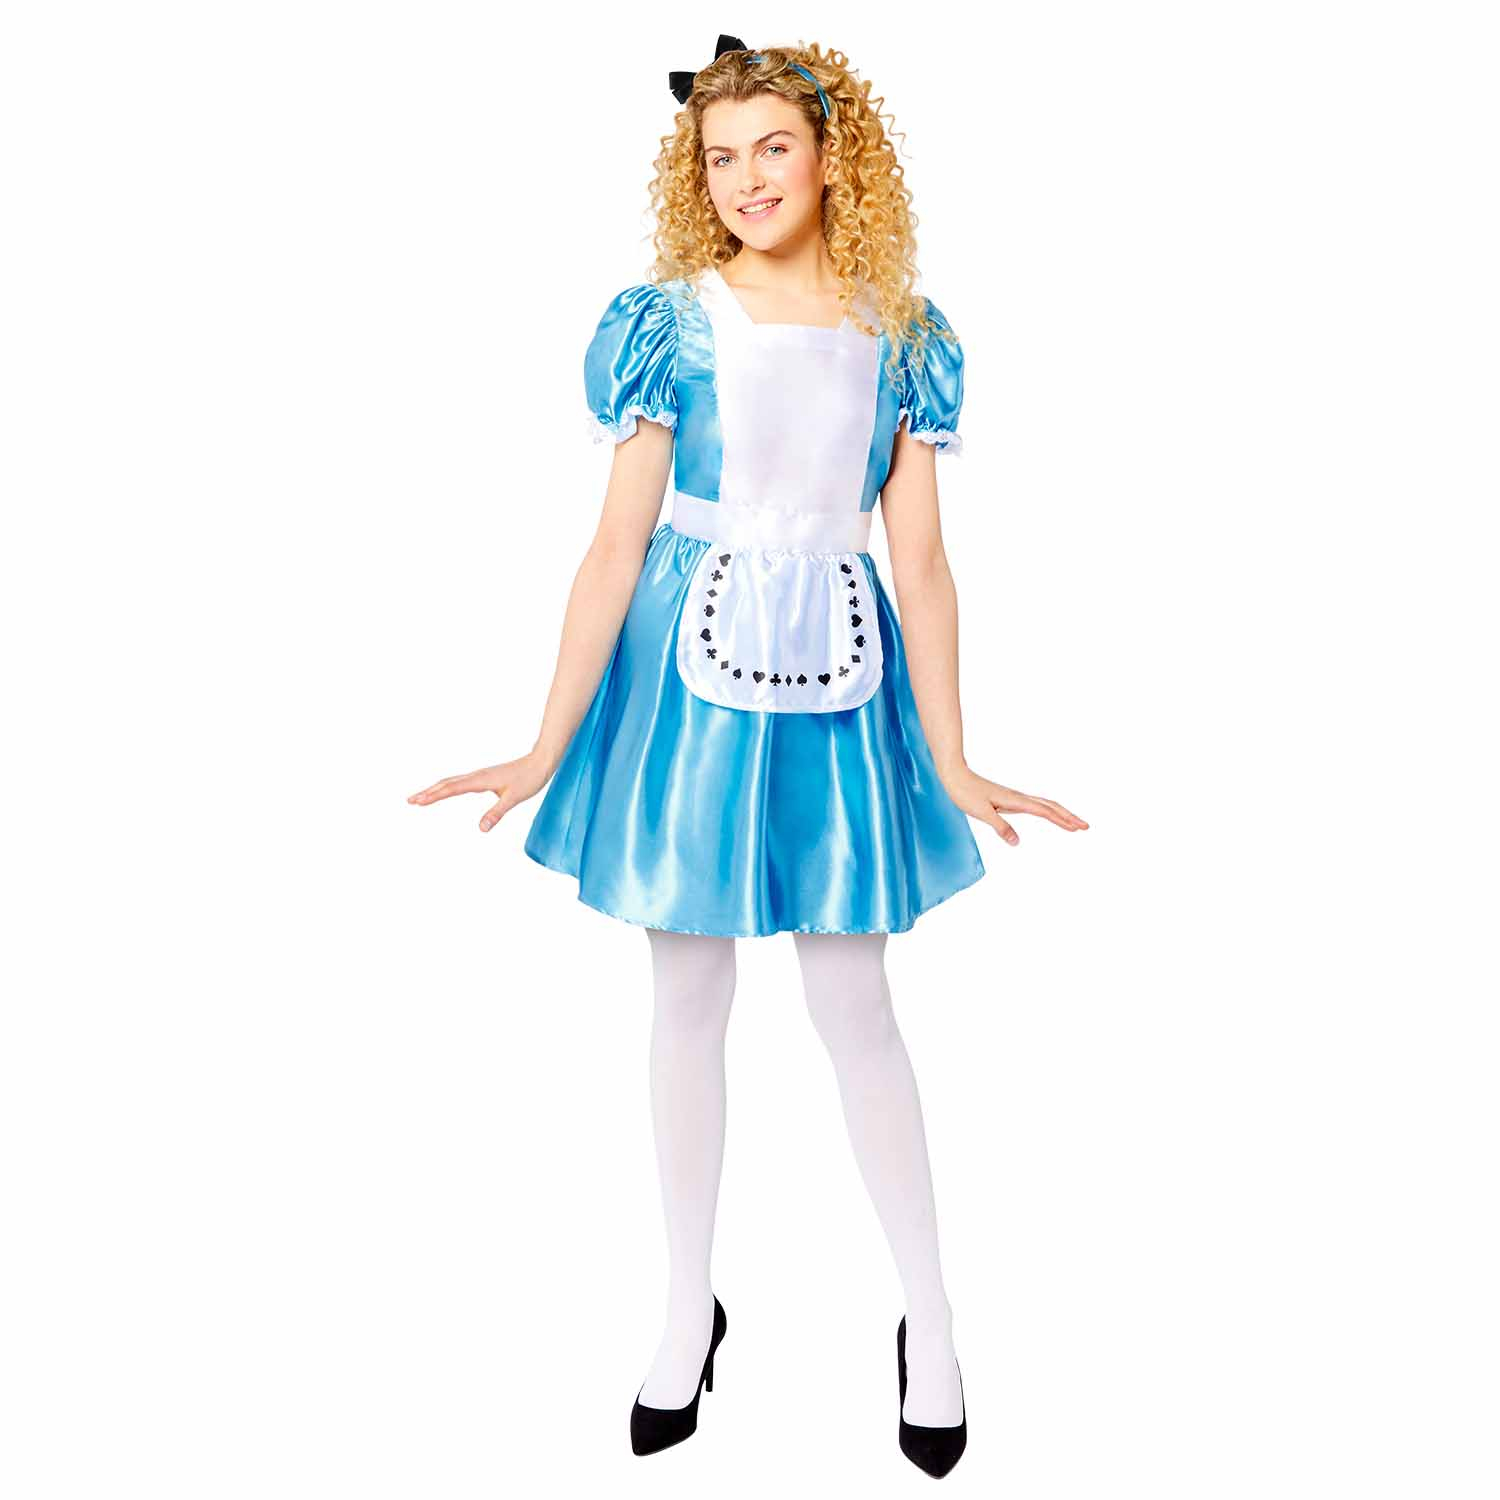 Alice in Wonderland Costume - Size 12-14 - 1 PC : Amscan International